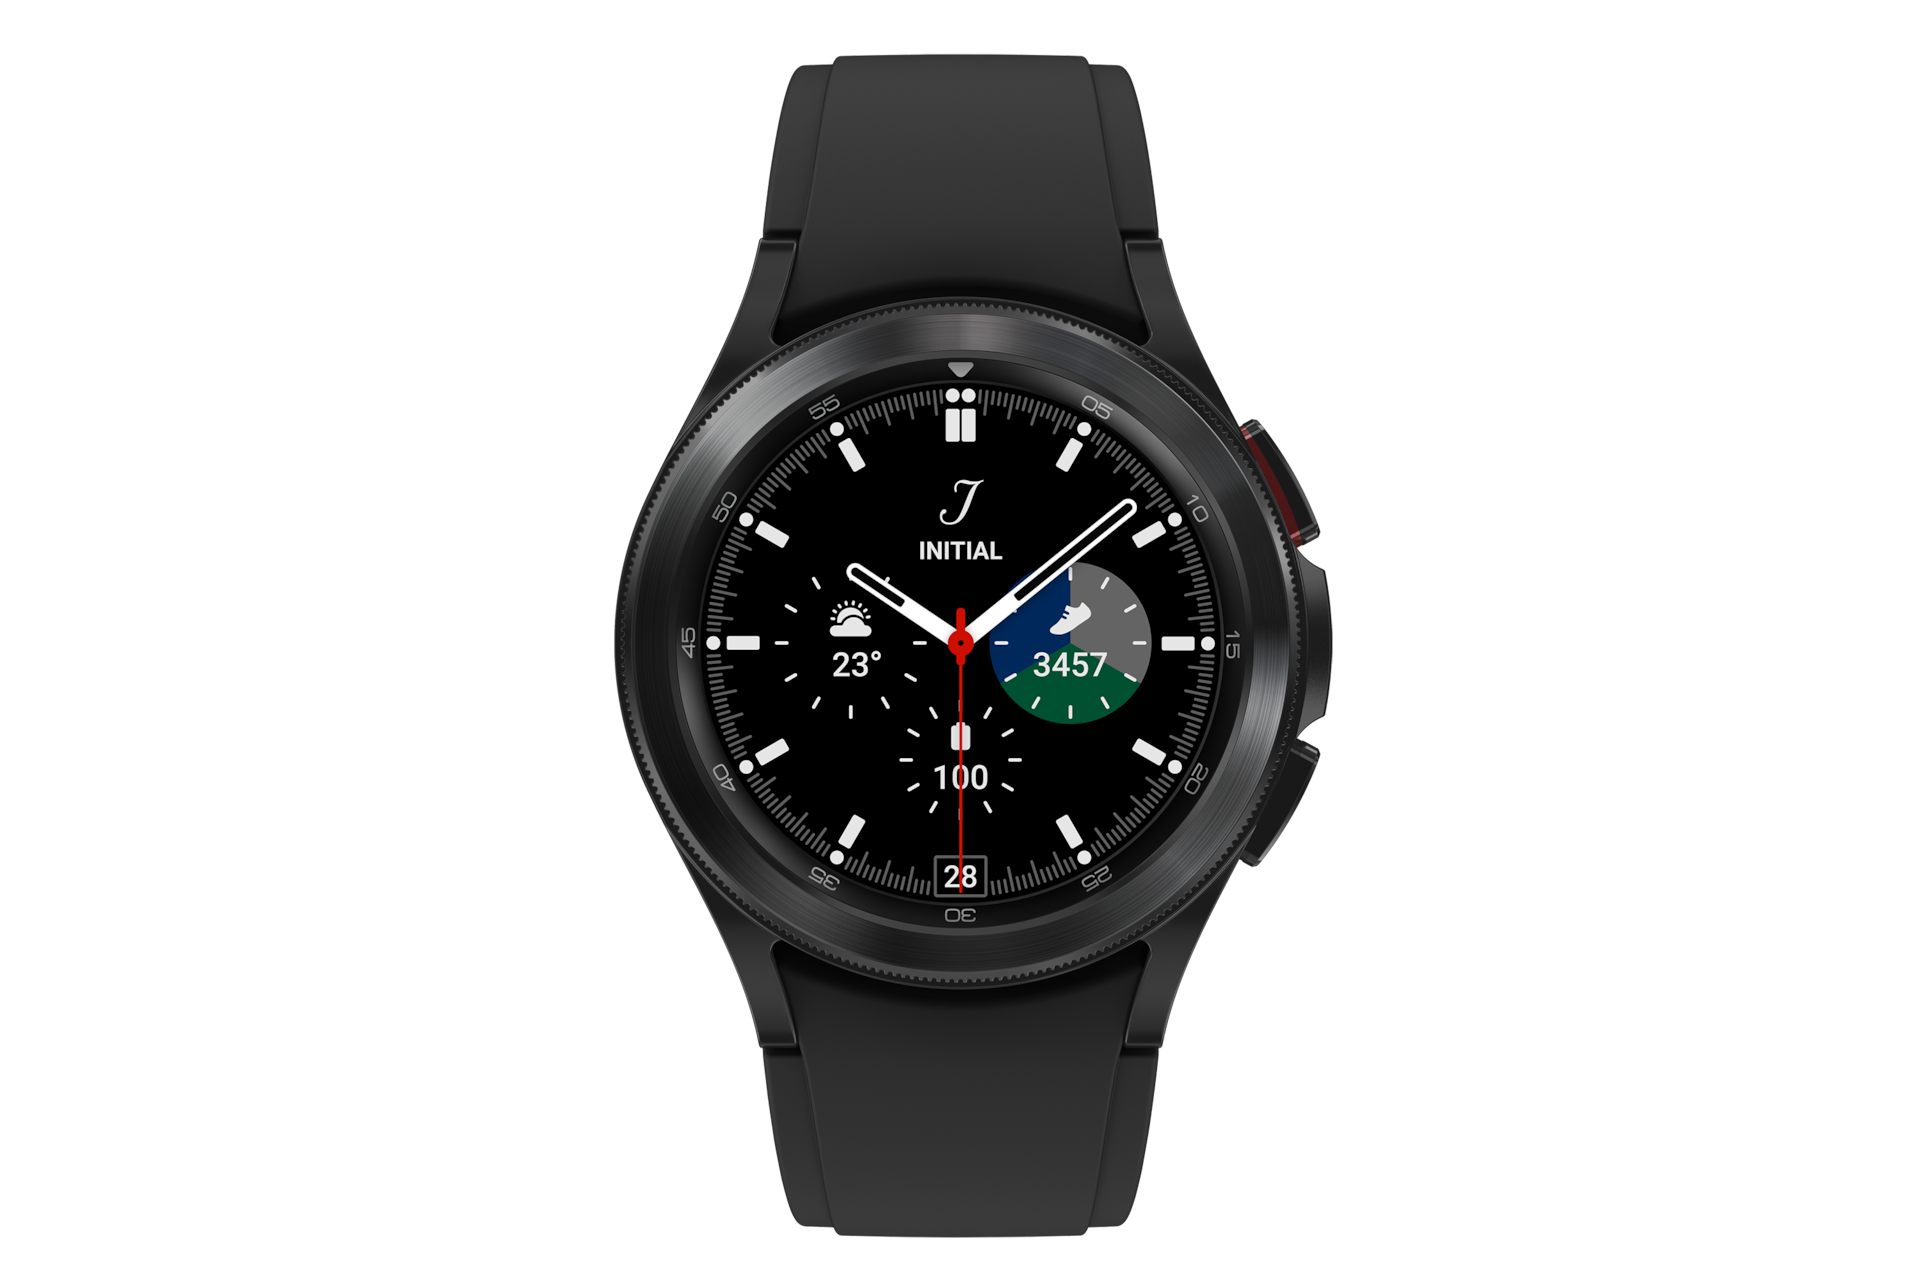 Galaxy Watch4 Classic 42mm black | Samsung US